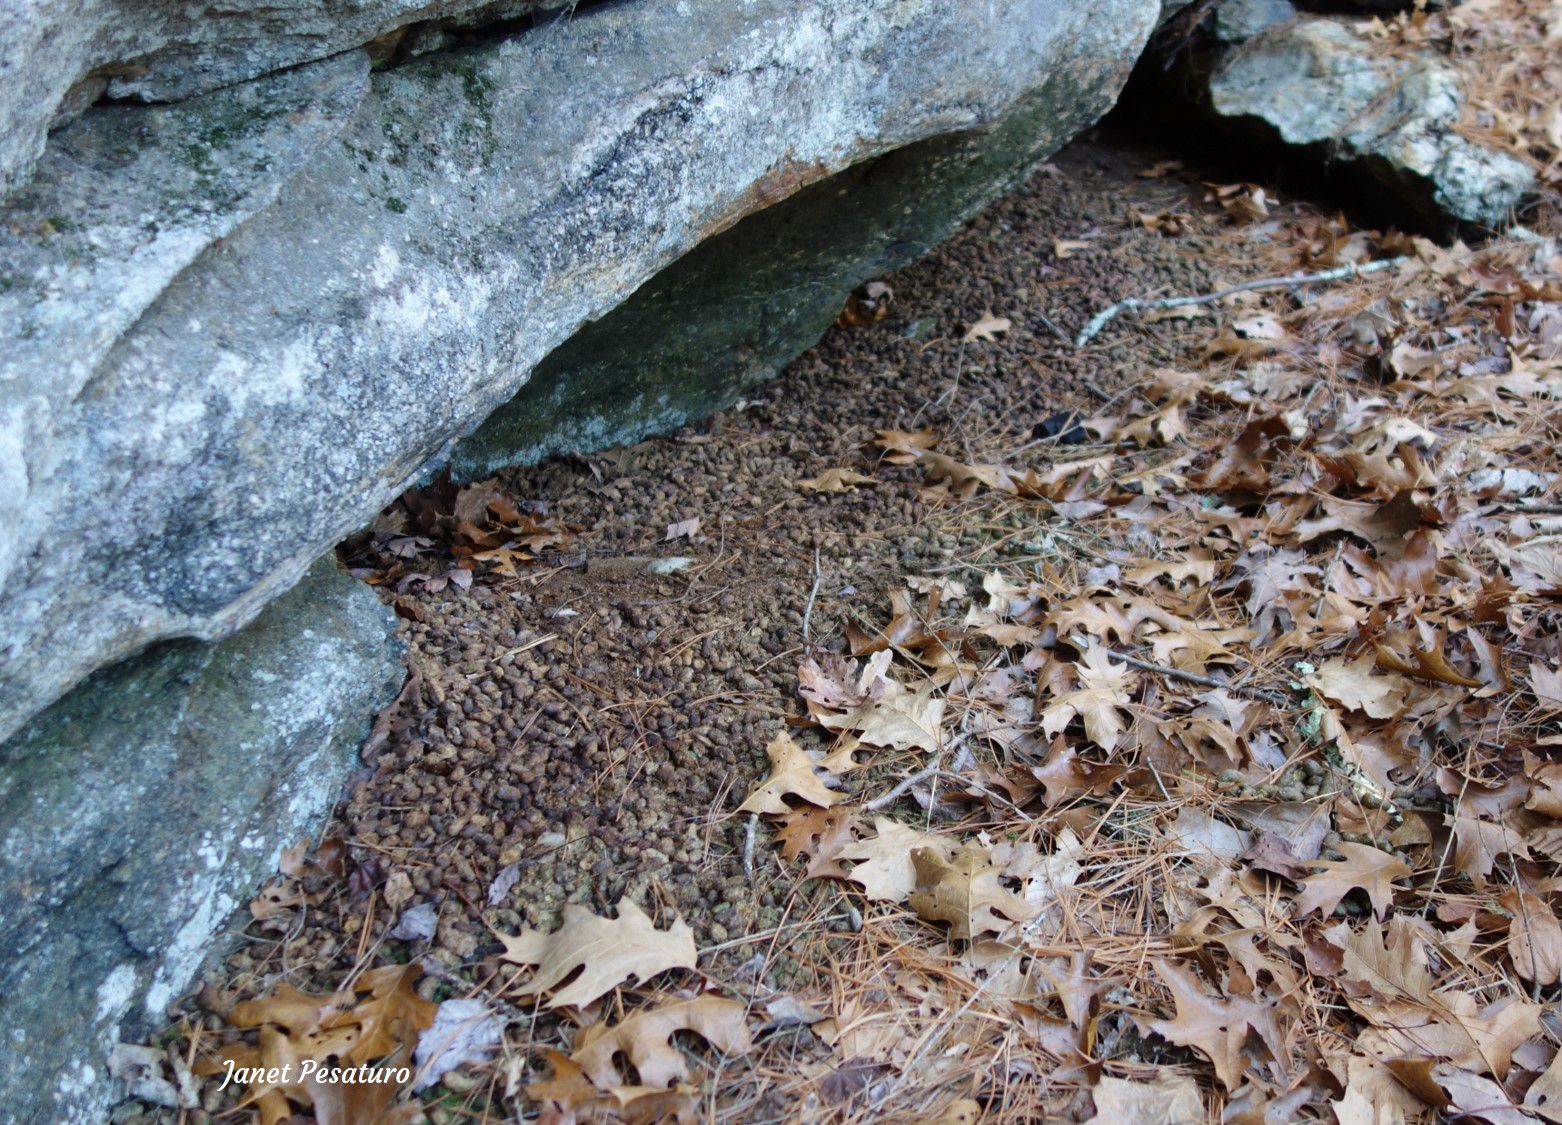 porcupine winter den under a rock overhang